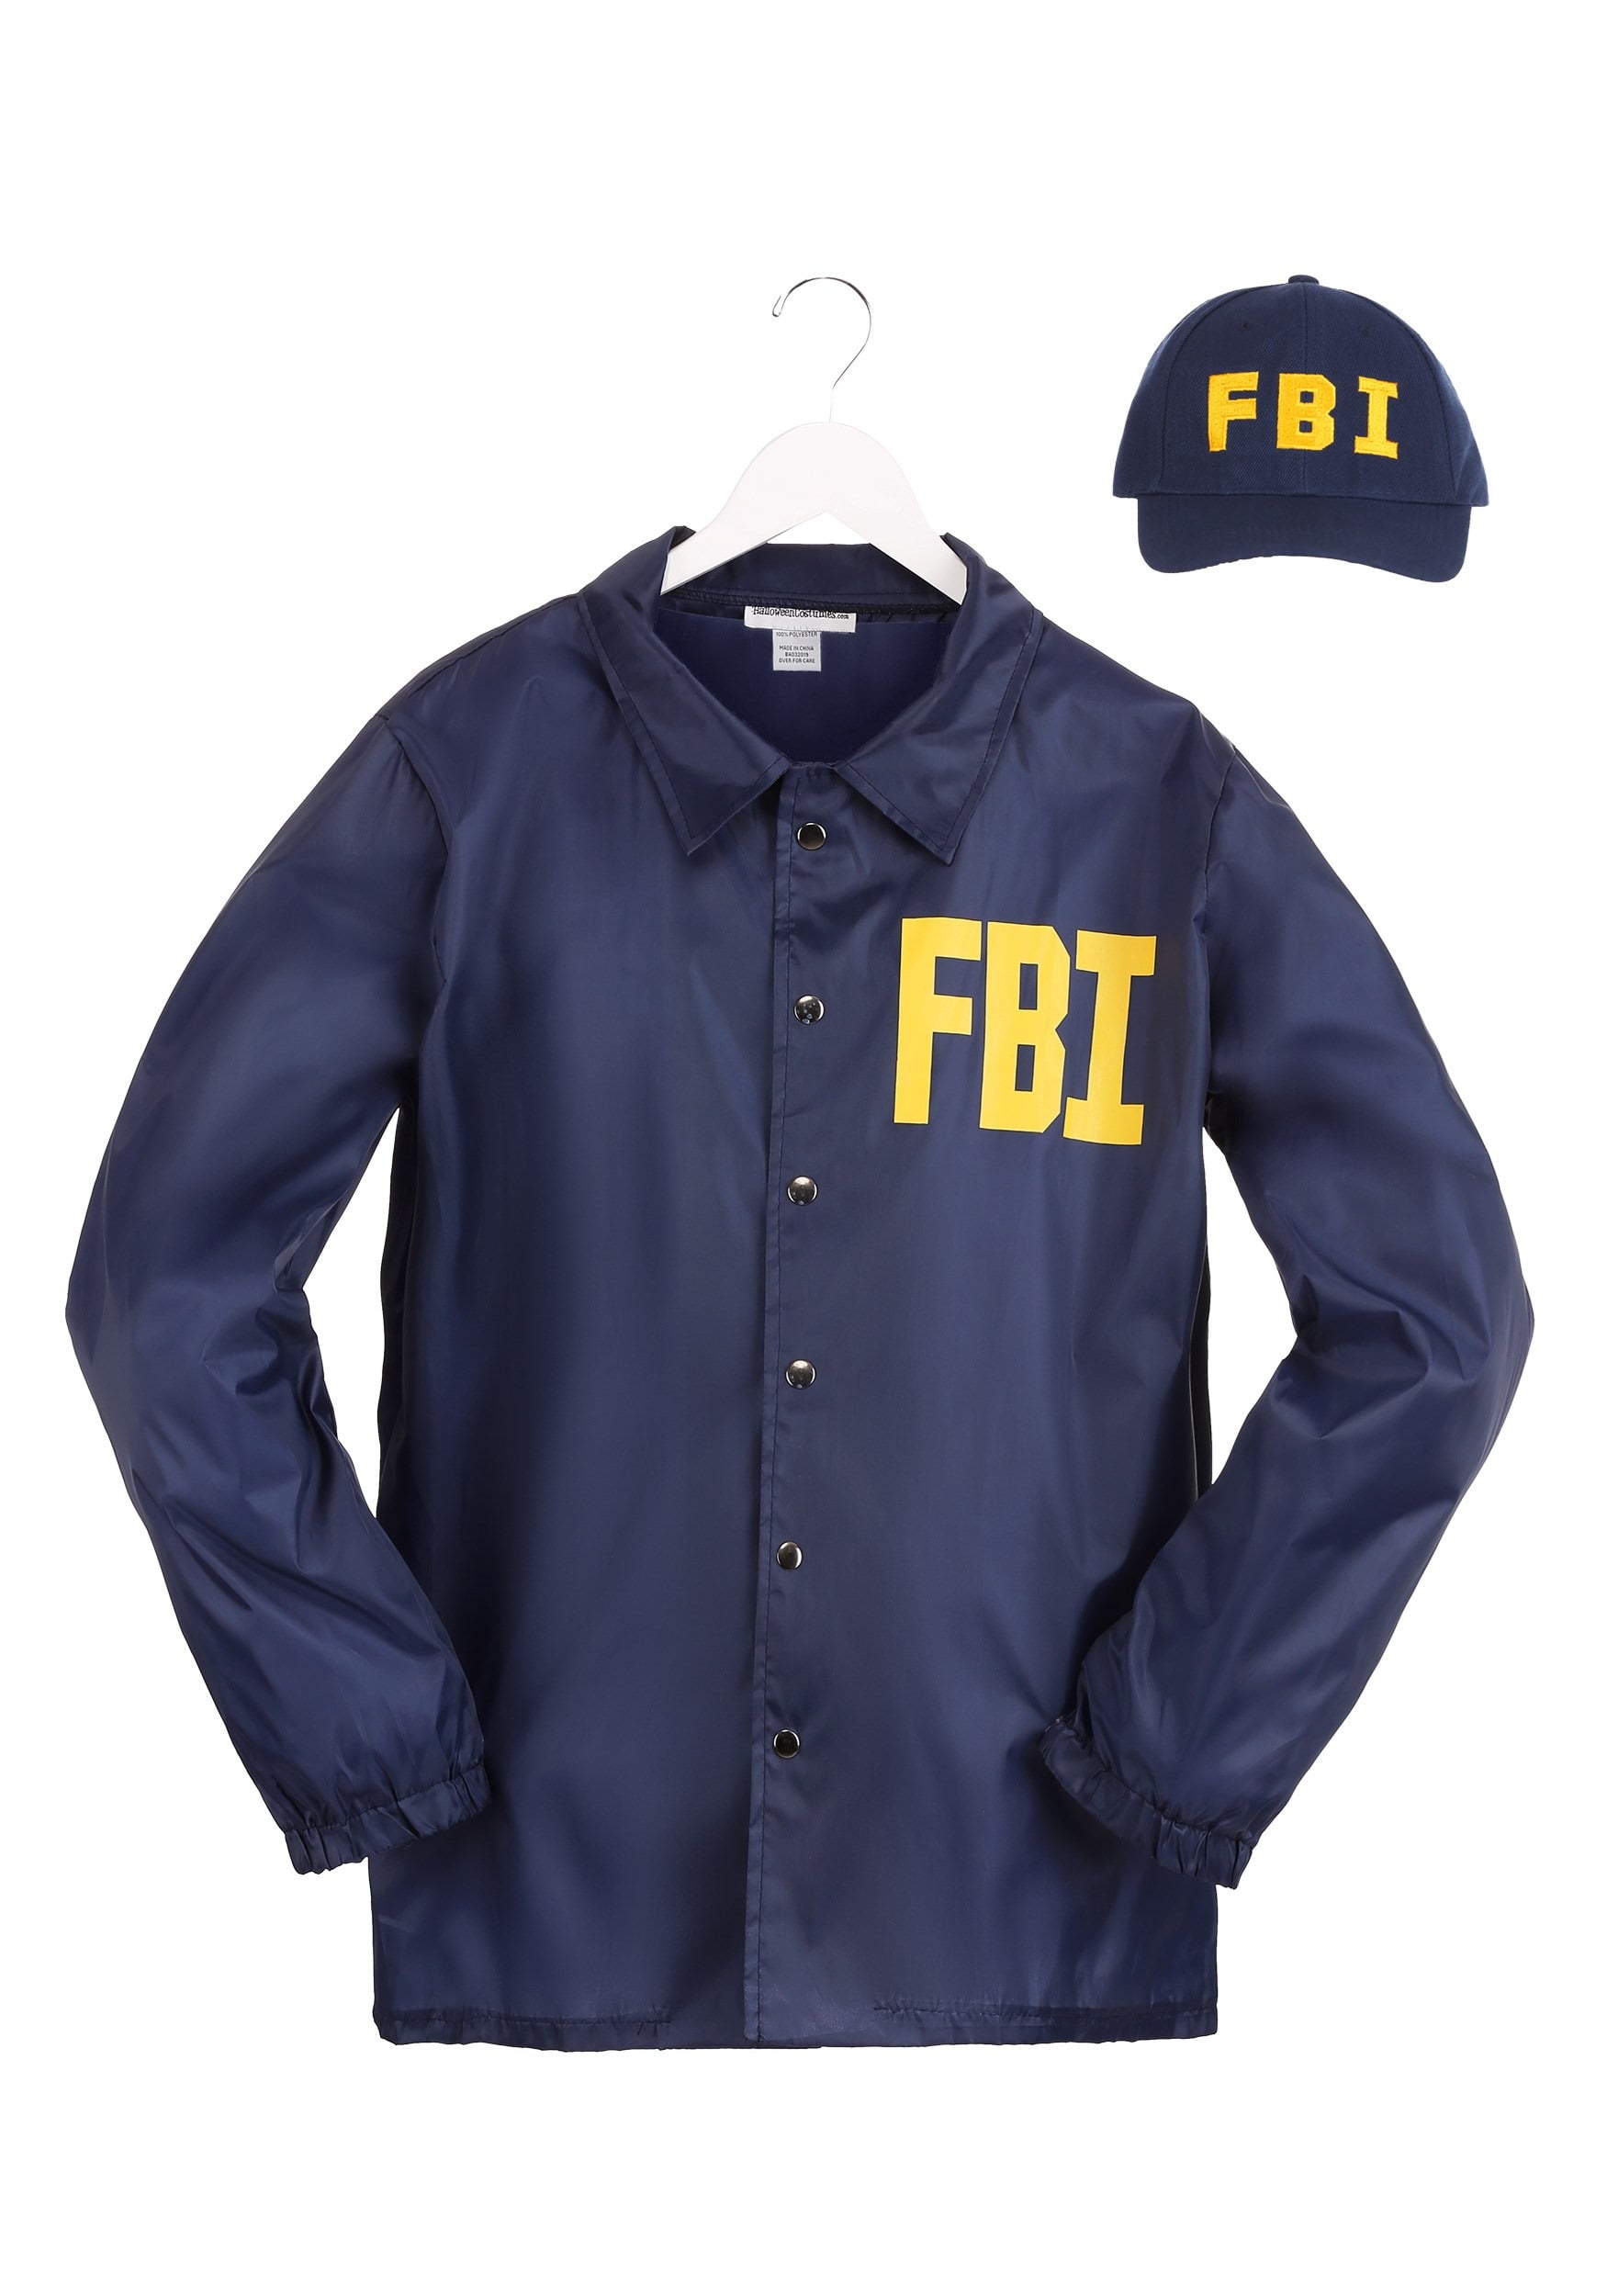 Adult FBI Costume - Walmart.com.